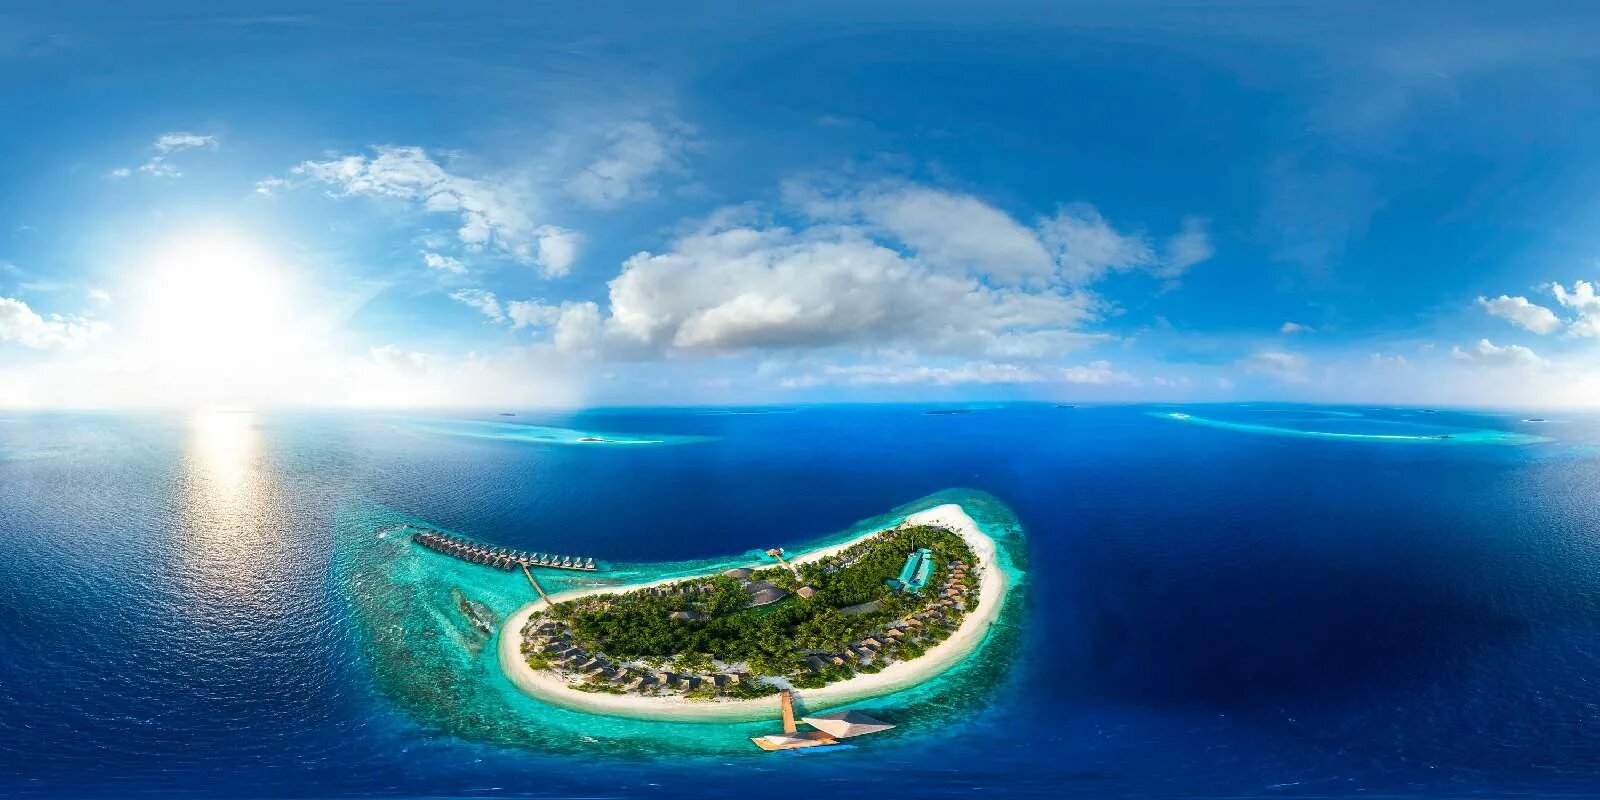 Мальдивы,Баа Атолл,Dreamland the unique Sea. Залив Ханифару, Атолл Баа. Dreamland the unique Sea & Lake Resort Spa 5*. Dreamland Maldives Resort. Dreamland unique